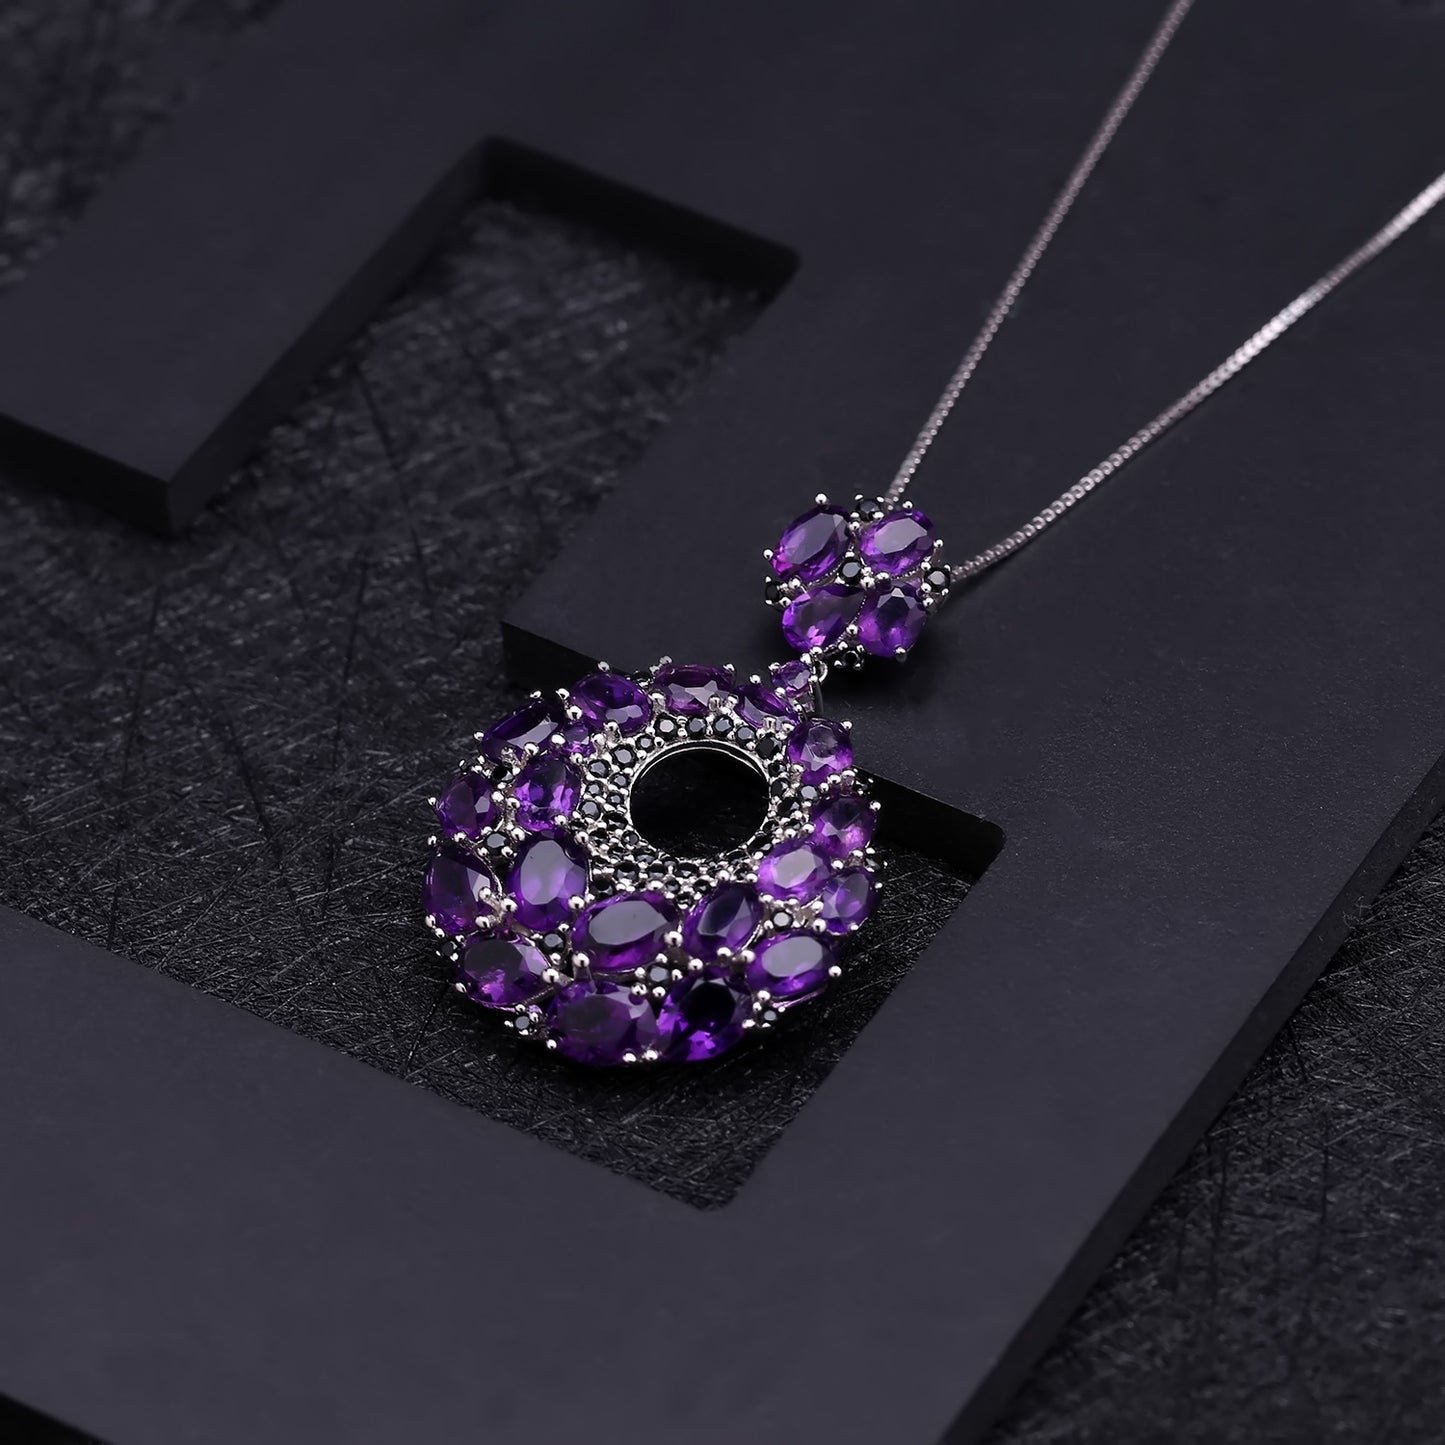 Hollow Circle Pendant Natural Gemstones Silver Necklace